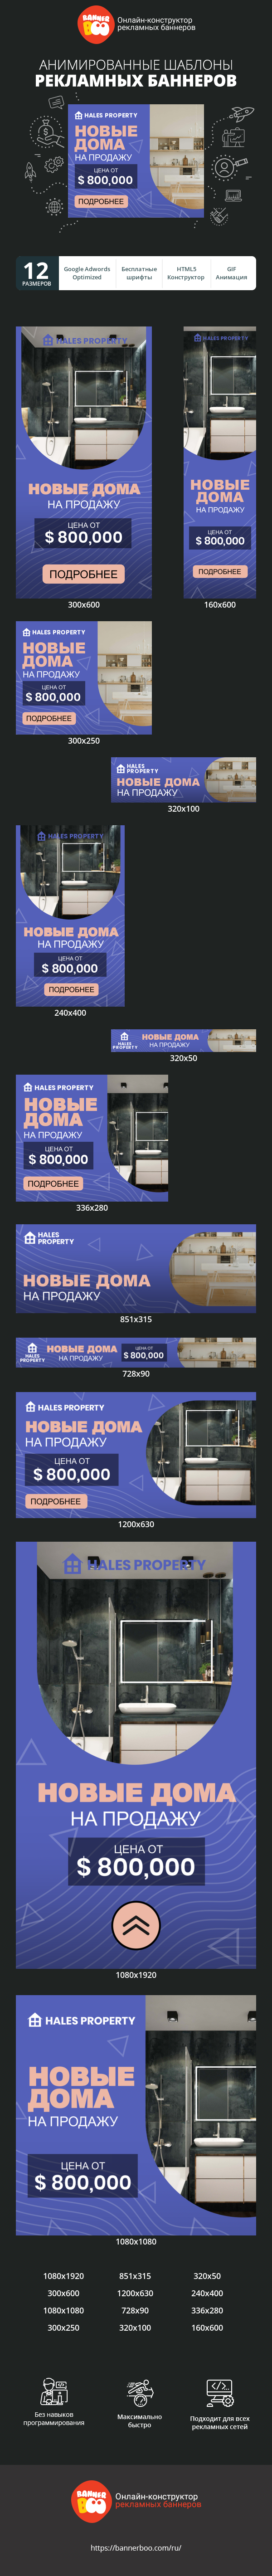 Шаблон рекламного баннера — Новые дома на продажу — цена от $ 800,000